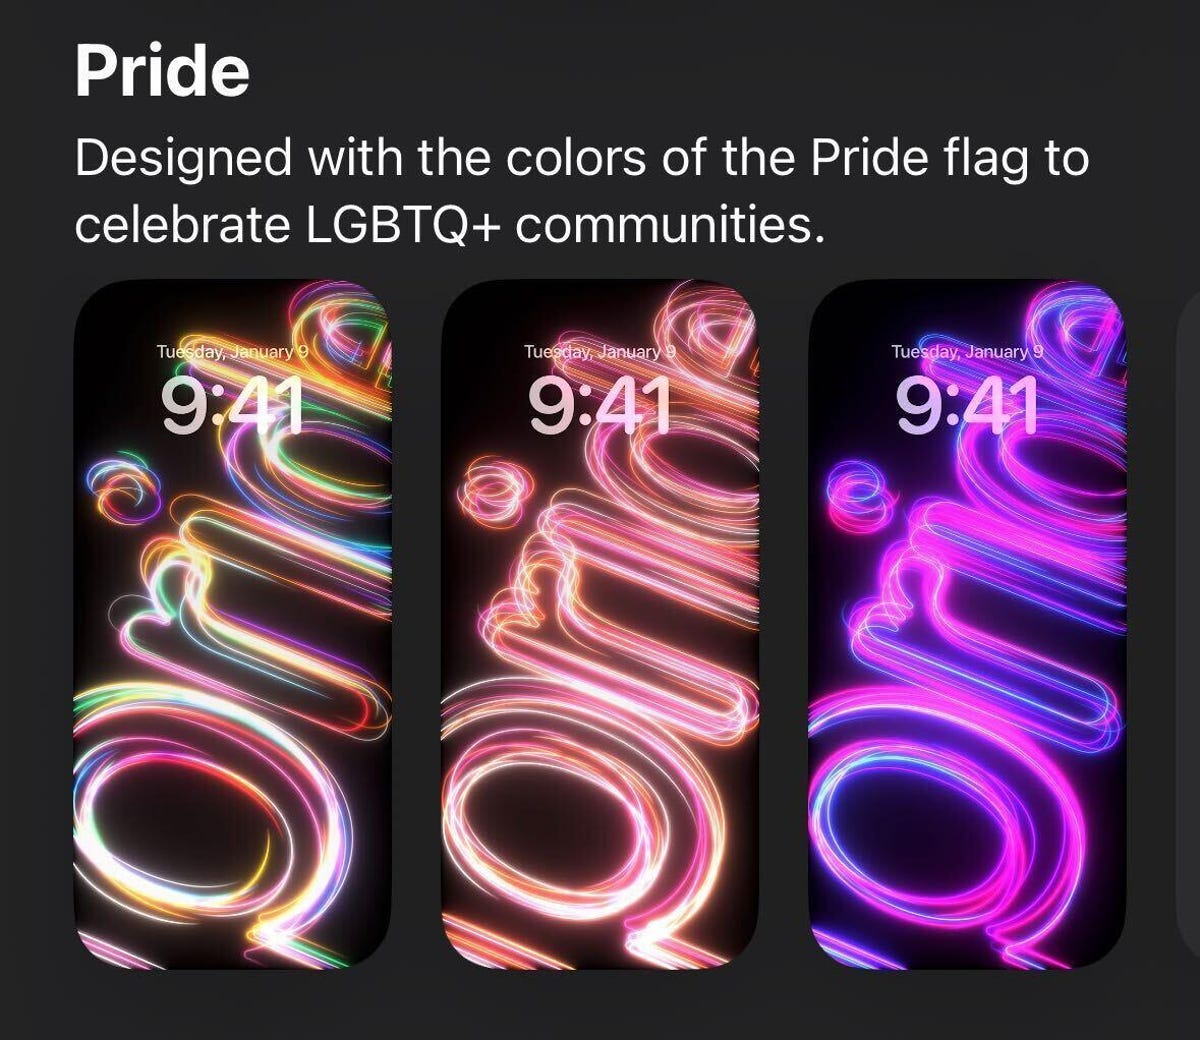 Fondos de pantalla de Pride Collection para iPhone en iOS 17.5 RC